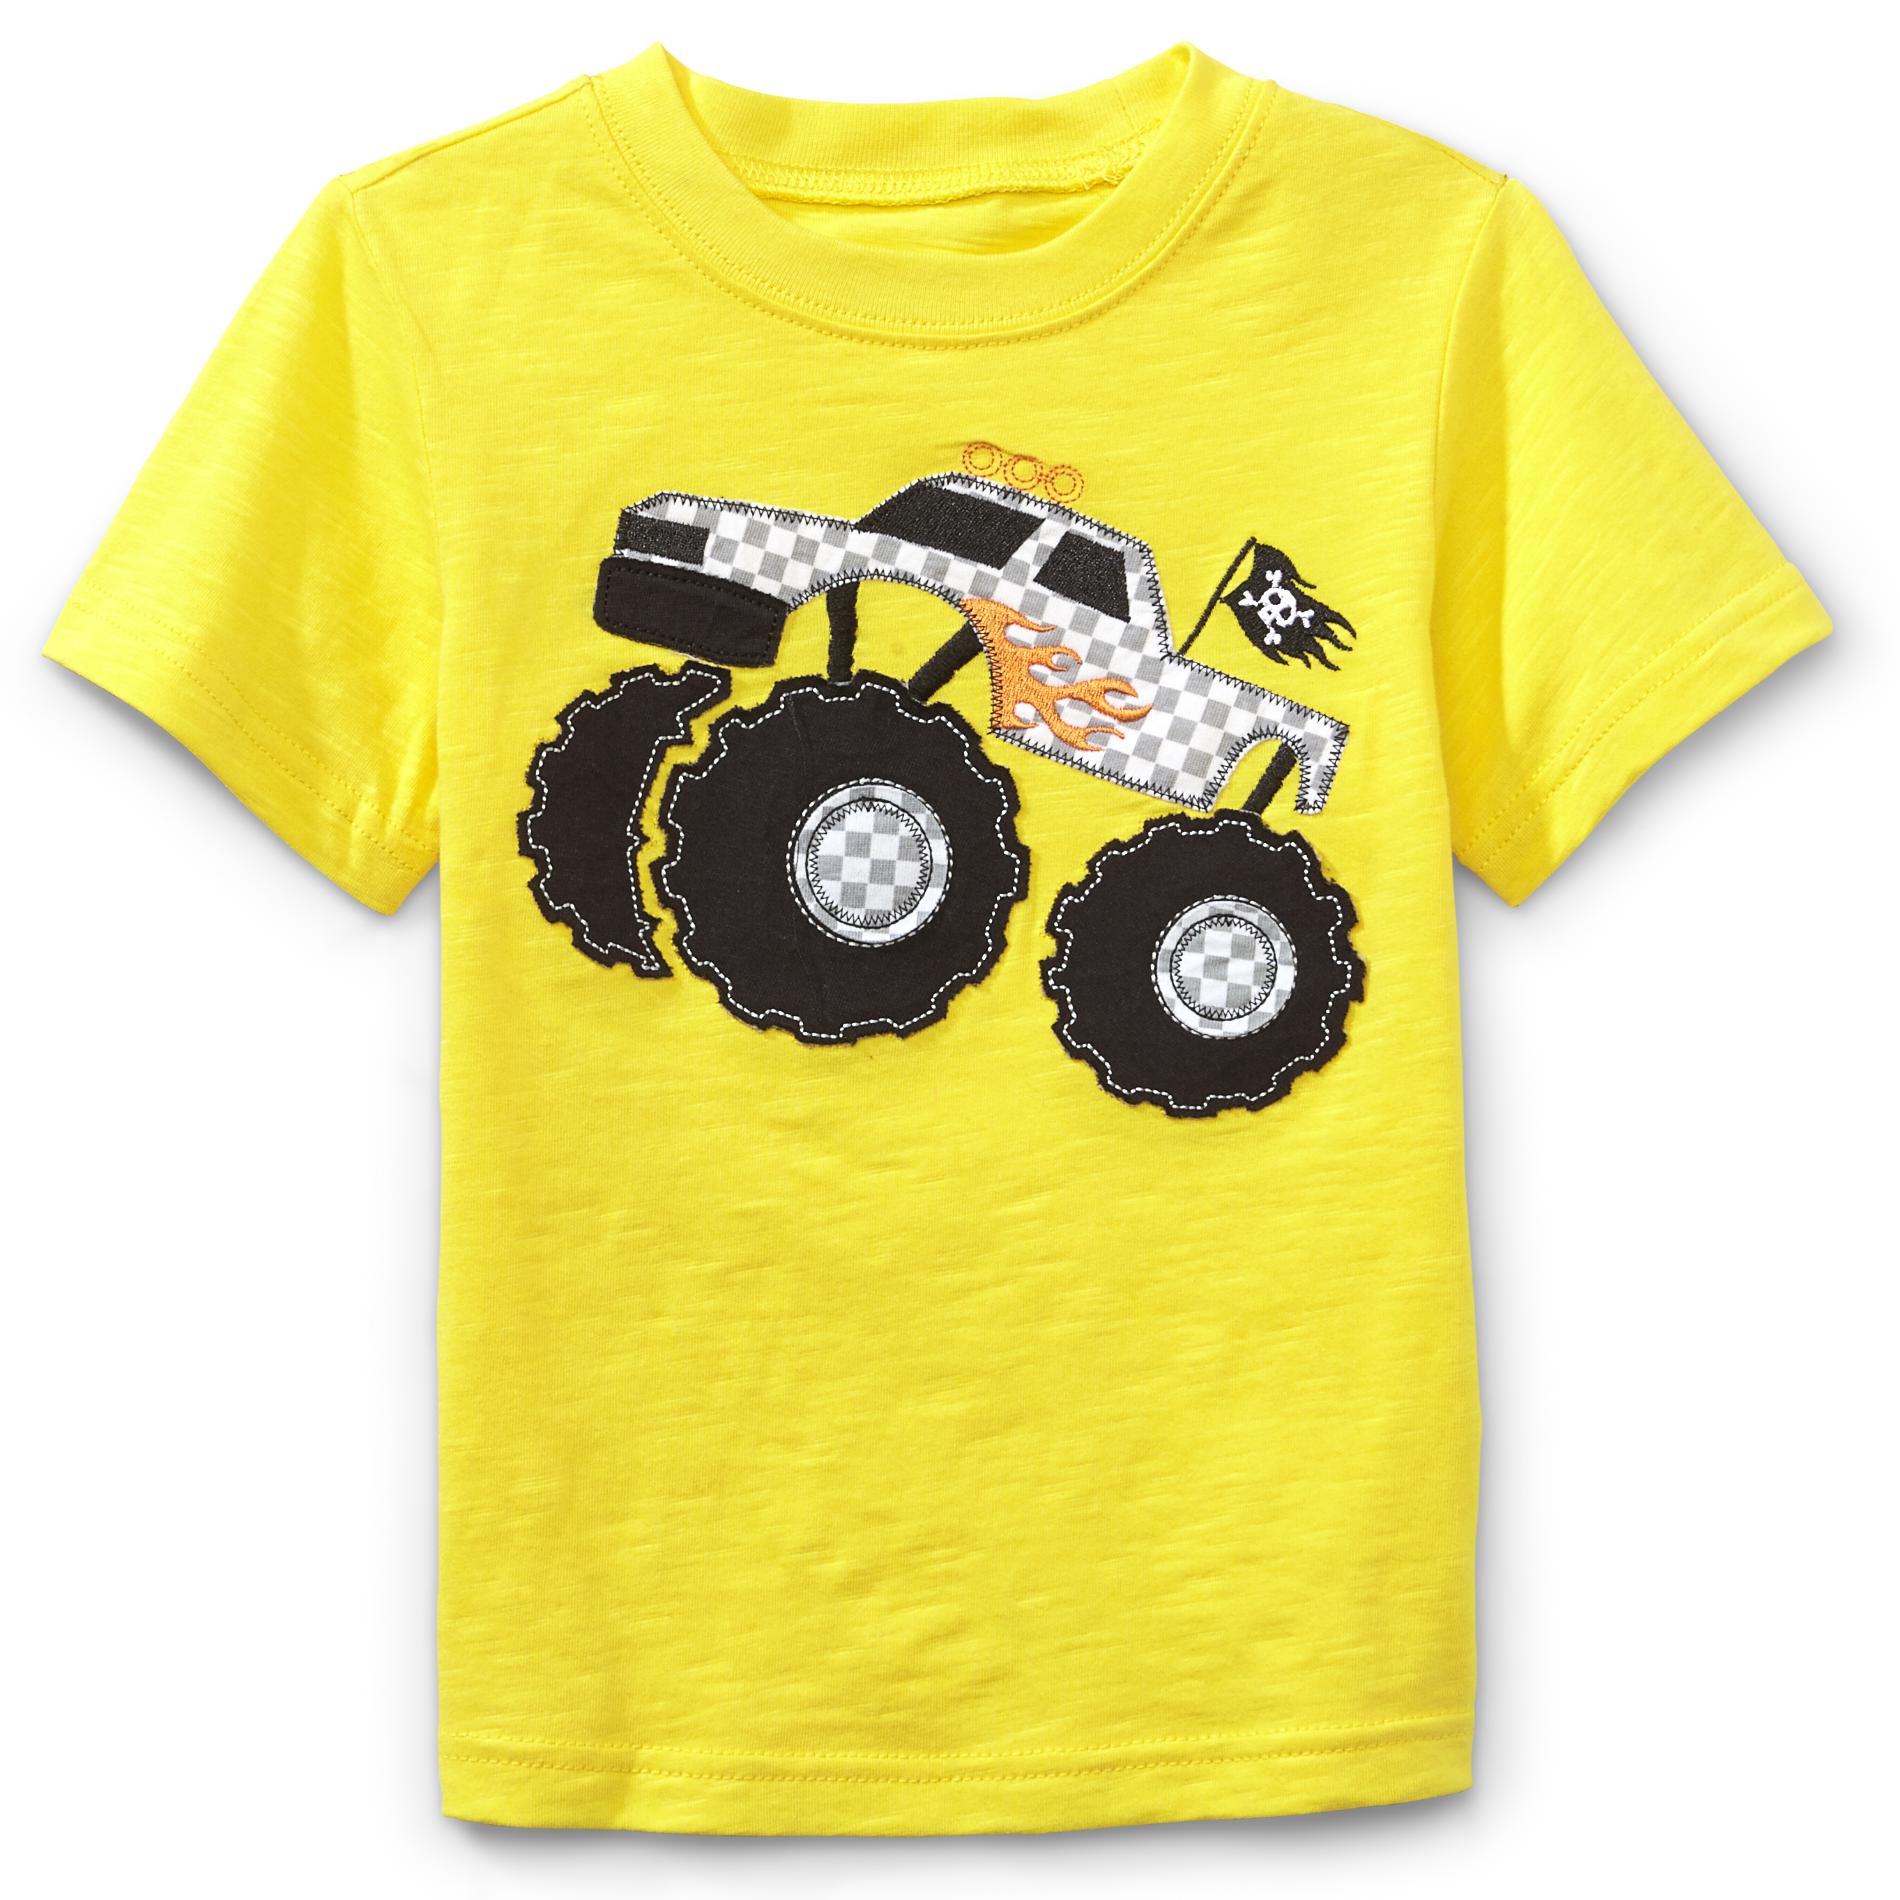 WonderKids Toddler Boy's Short-Sleeve Graphic T-Shirt - Monster Truck